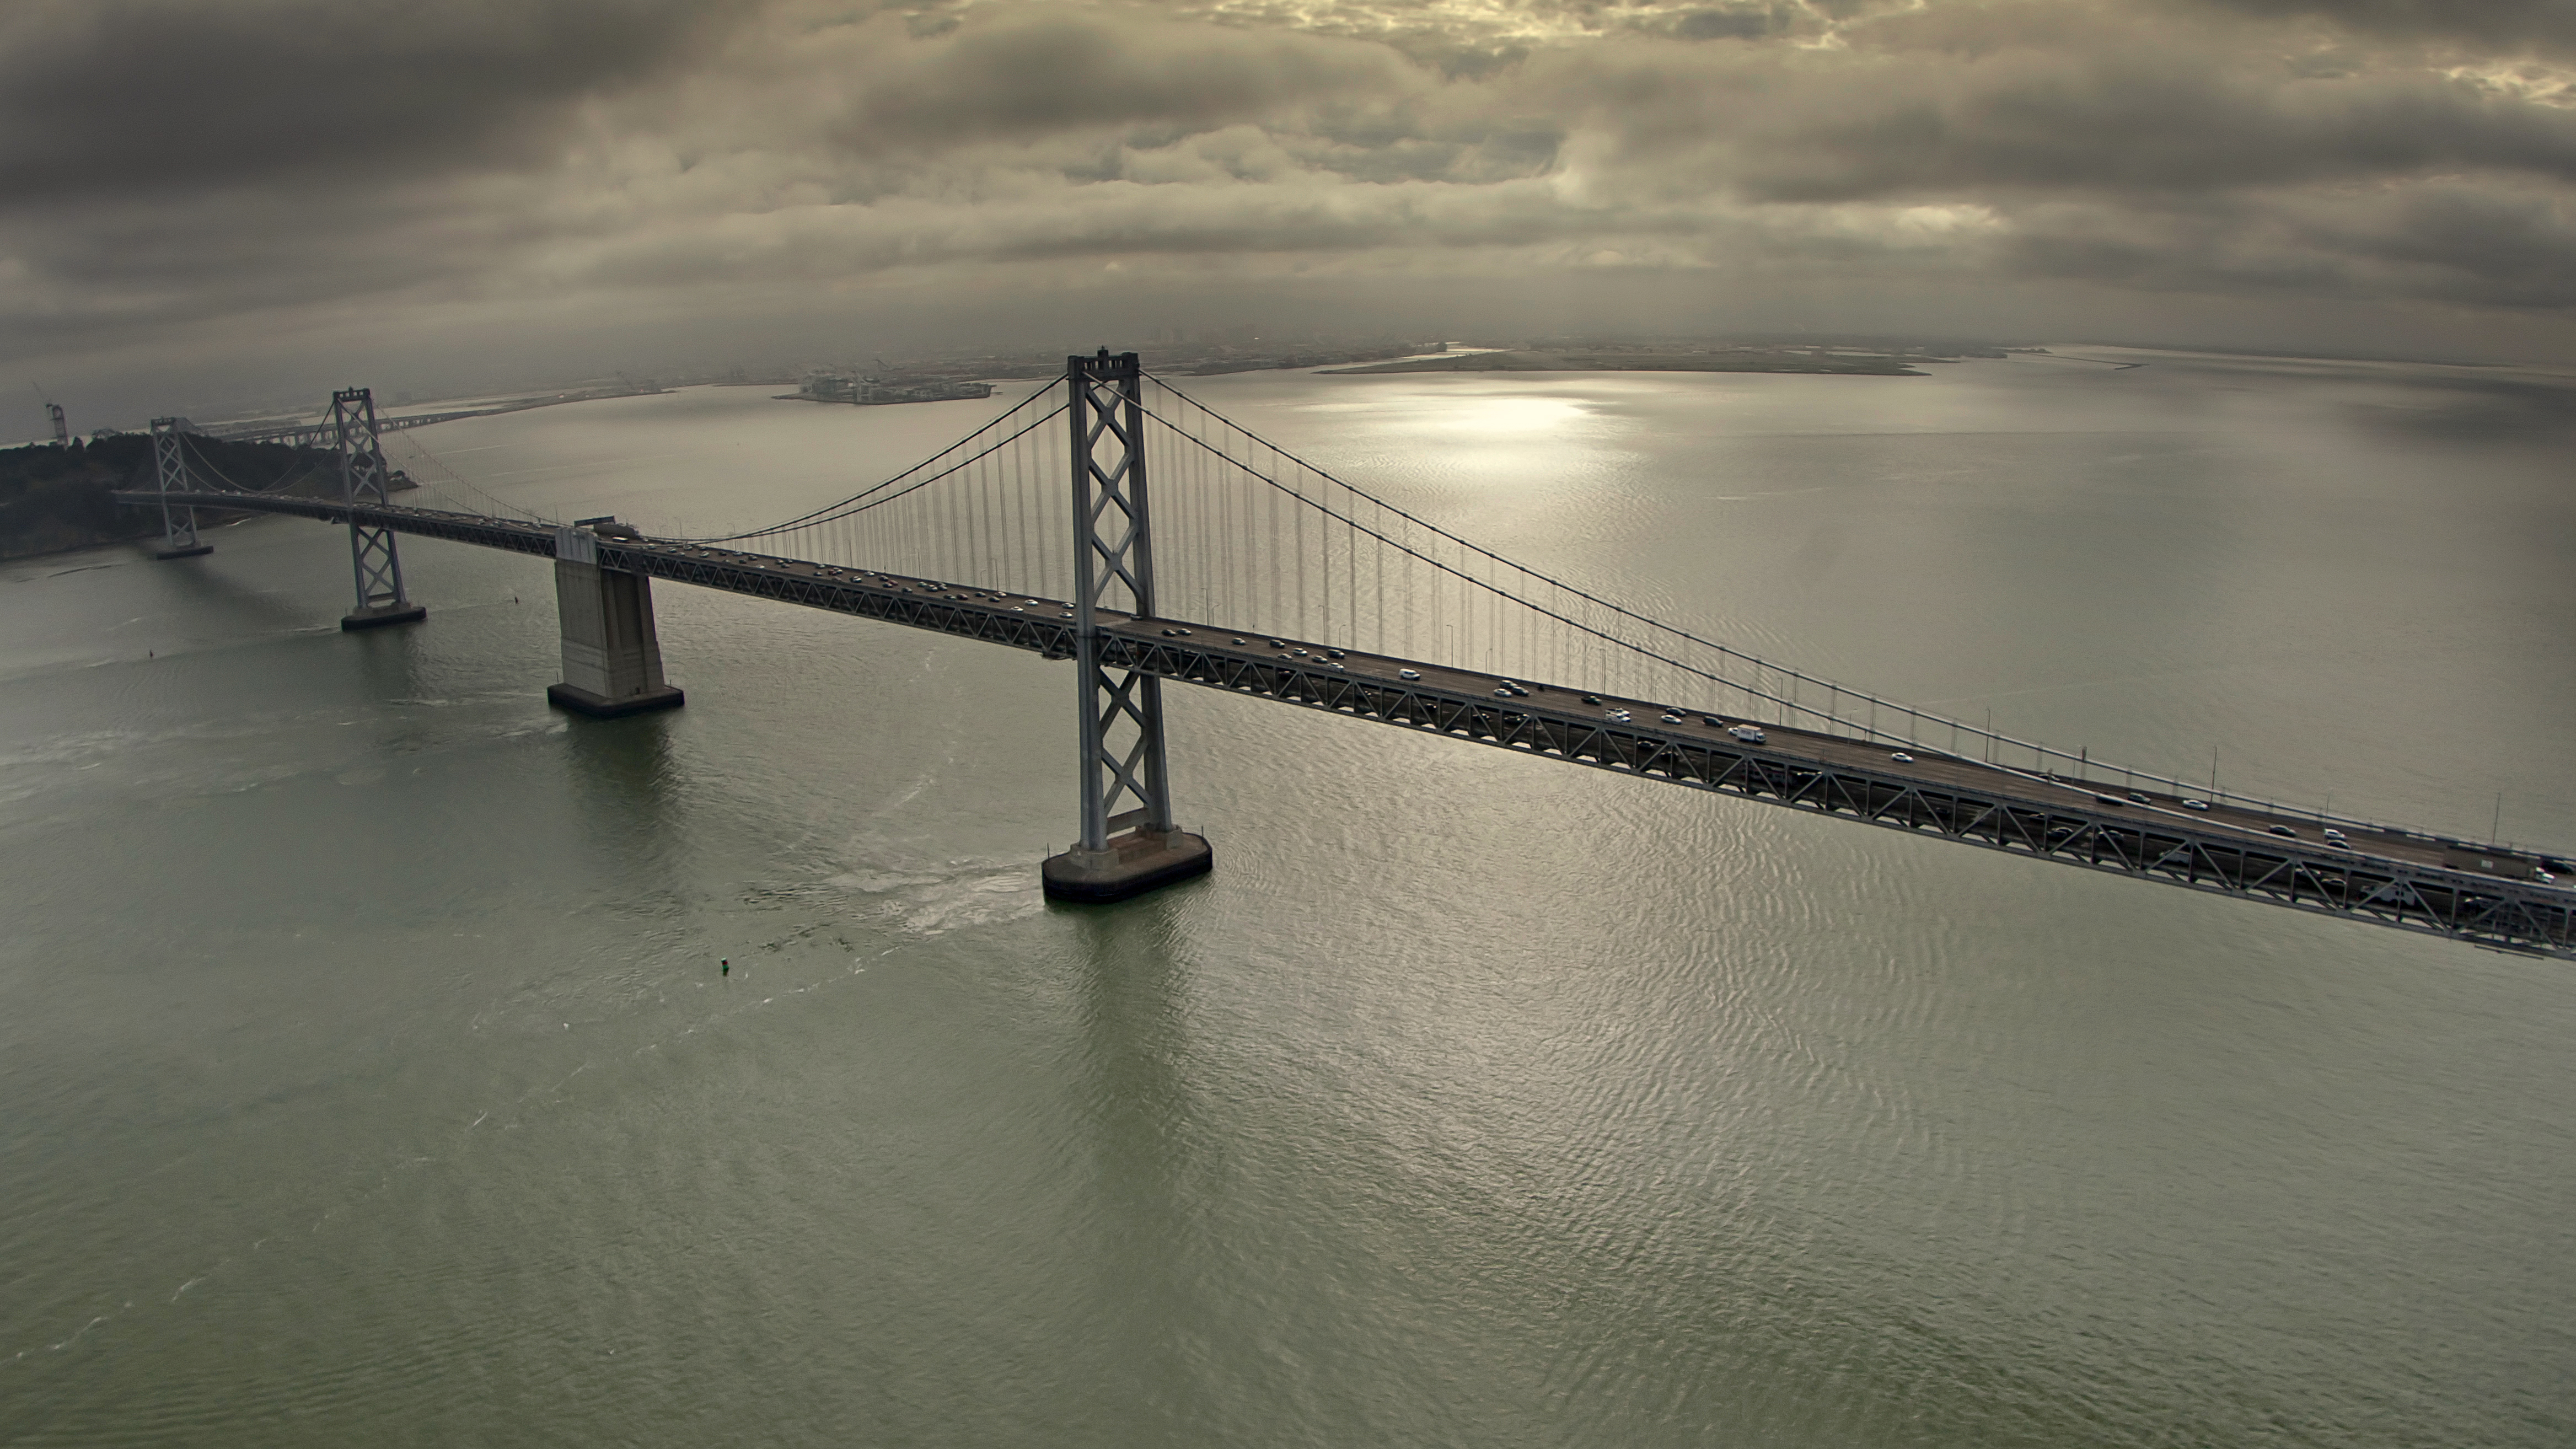 File:Bay Bridge - Aerial Shot.jpg - Wikimedia Commons